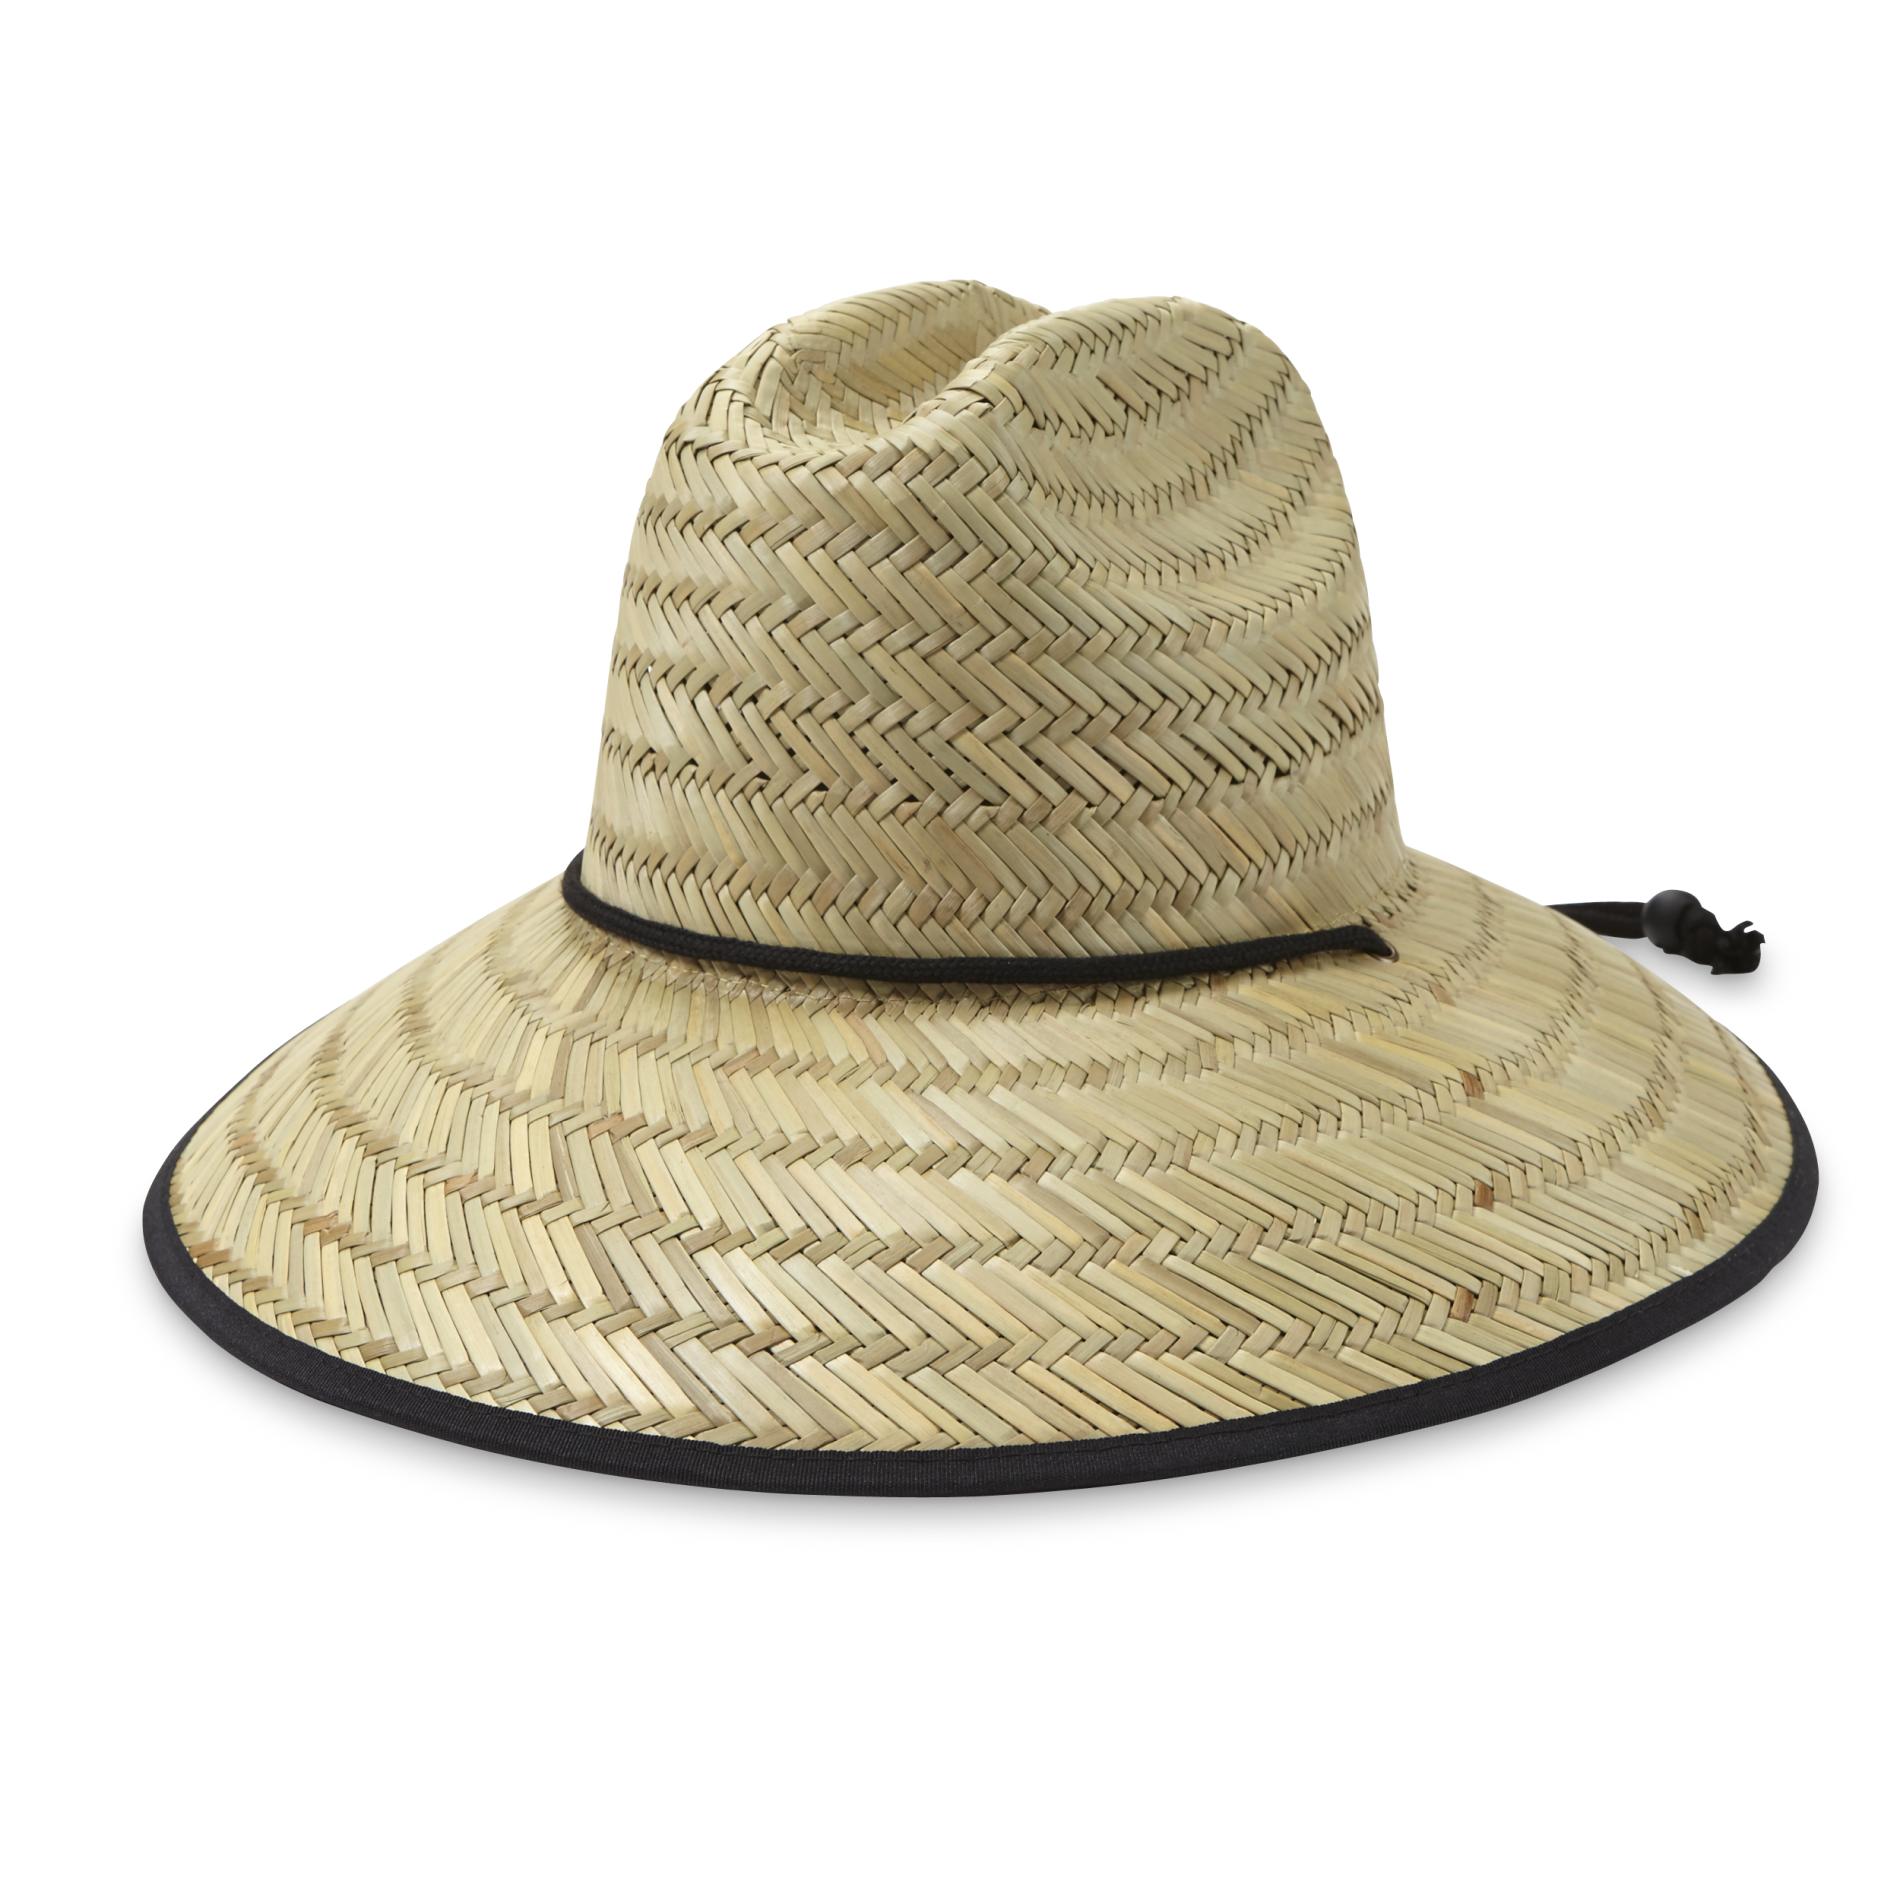 Men's Straw Lifeguard Hat